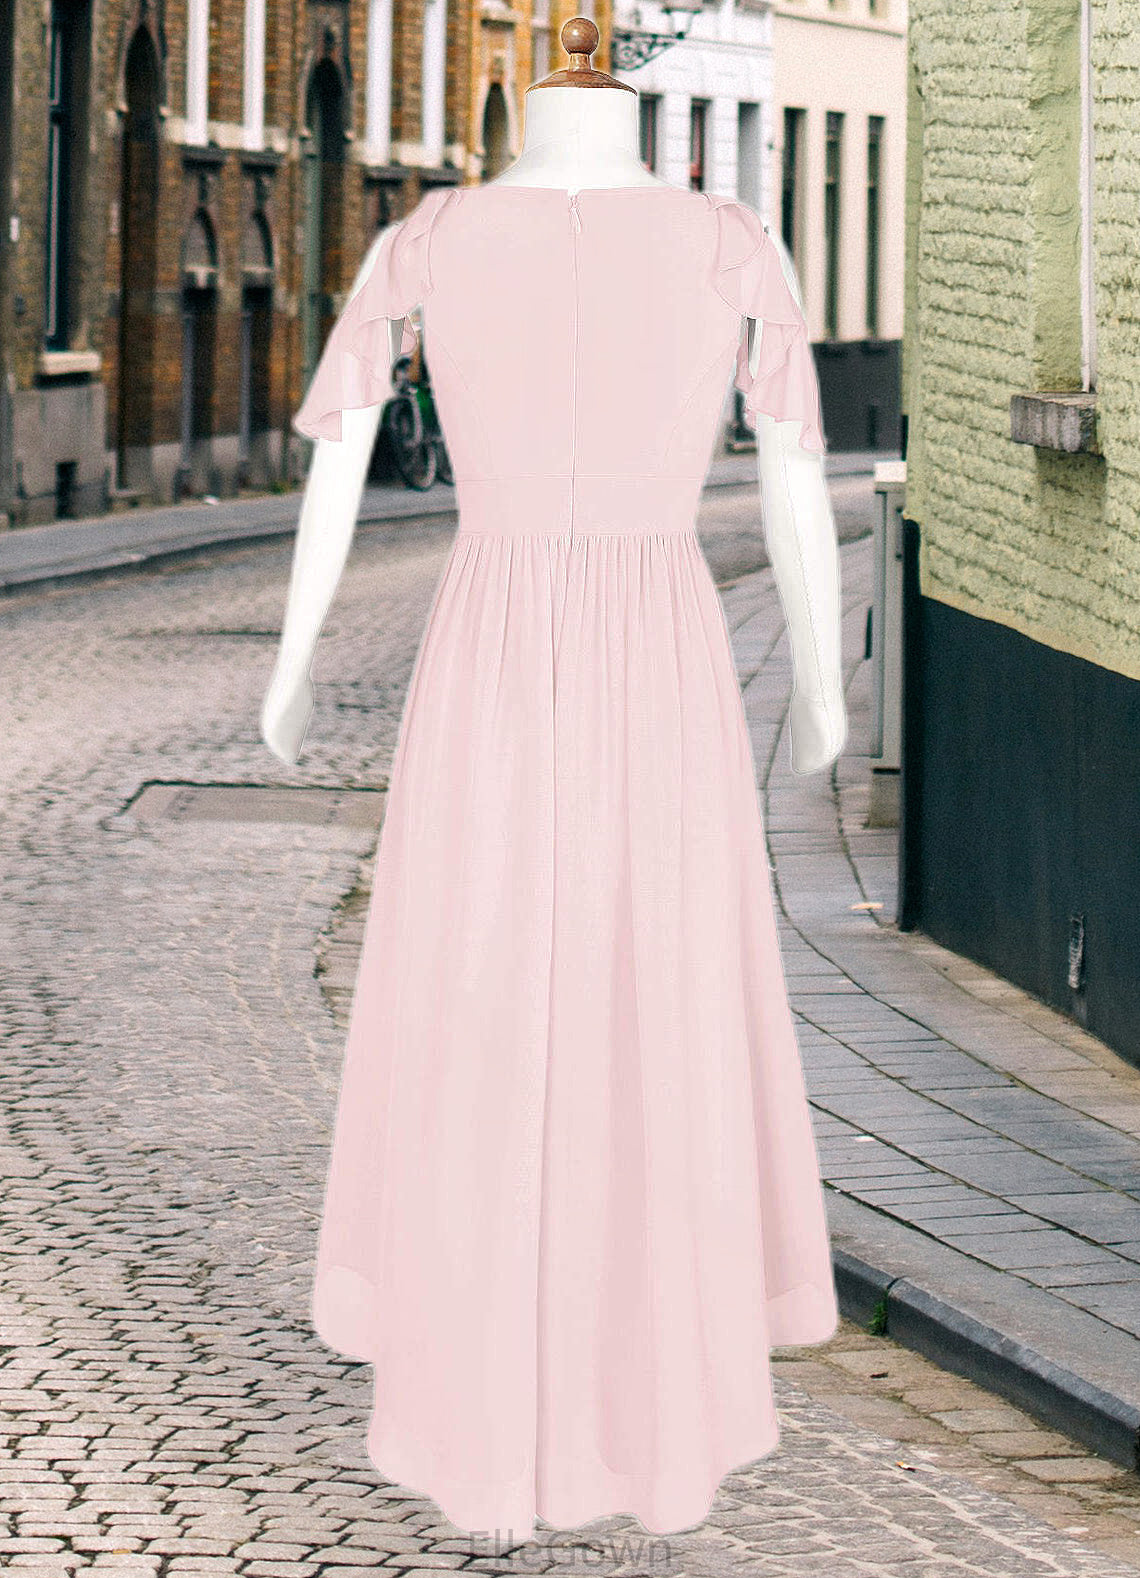 Alyson A-Line Ruched Chiffon Asymmetrical Junior Bridesmaid Dress Blushing Pink DEP0022862